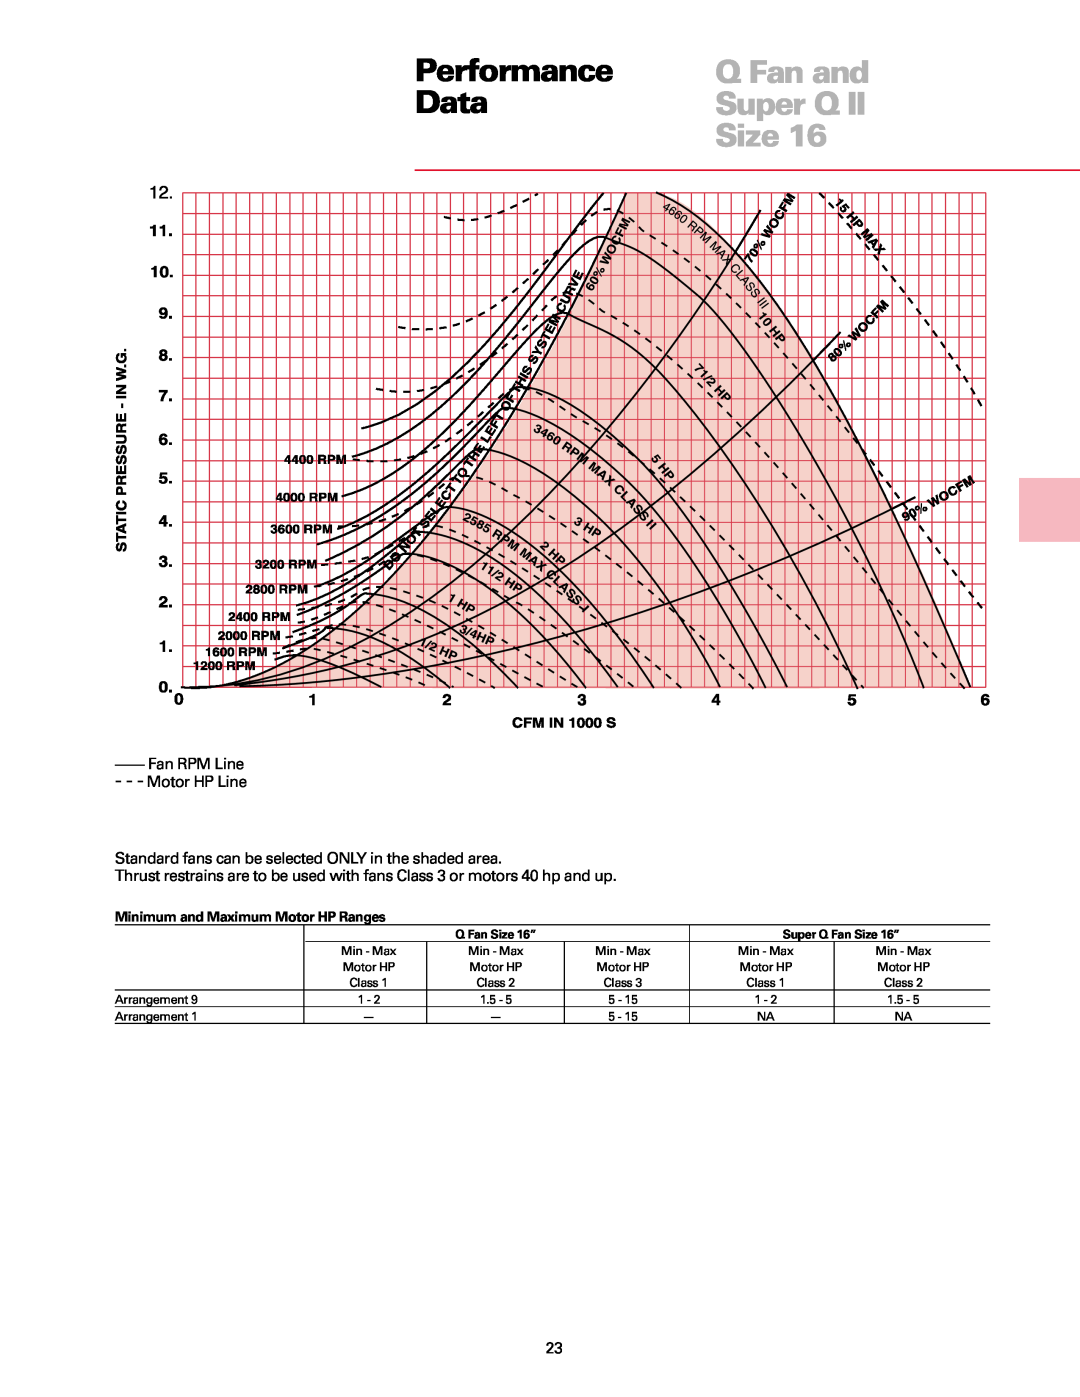 Trane manual Performance, Data, Q Fan and, Super Q Fan Size 16” 